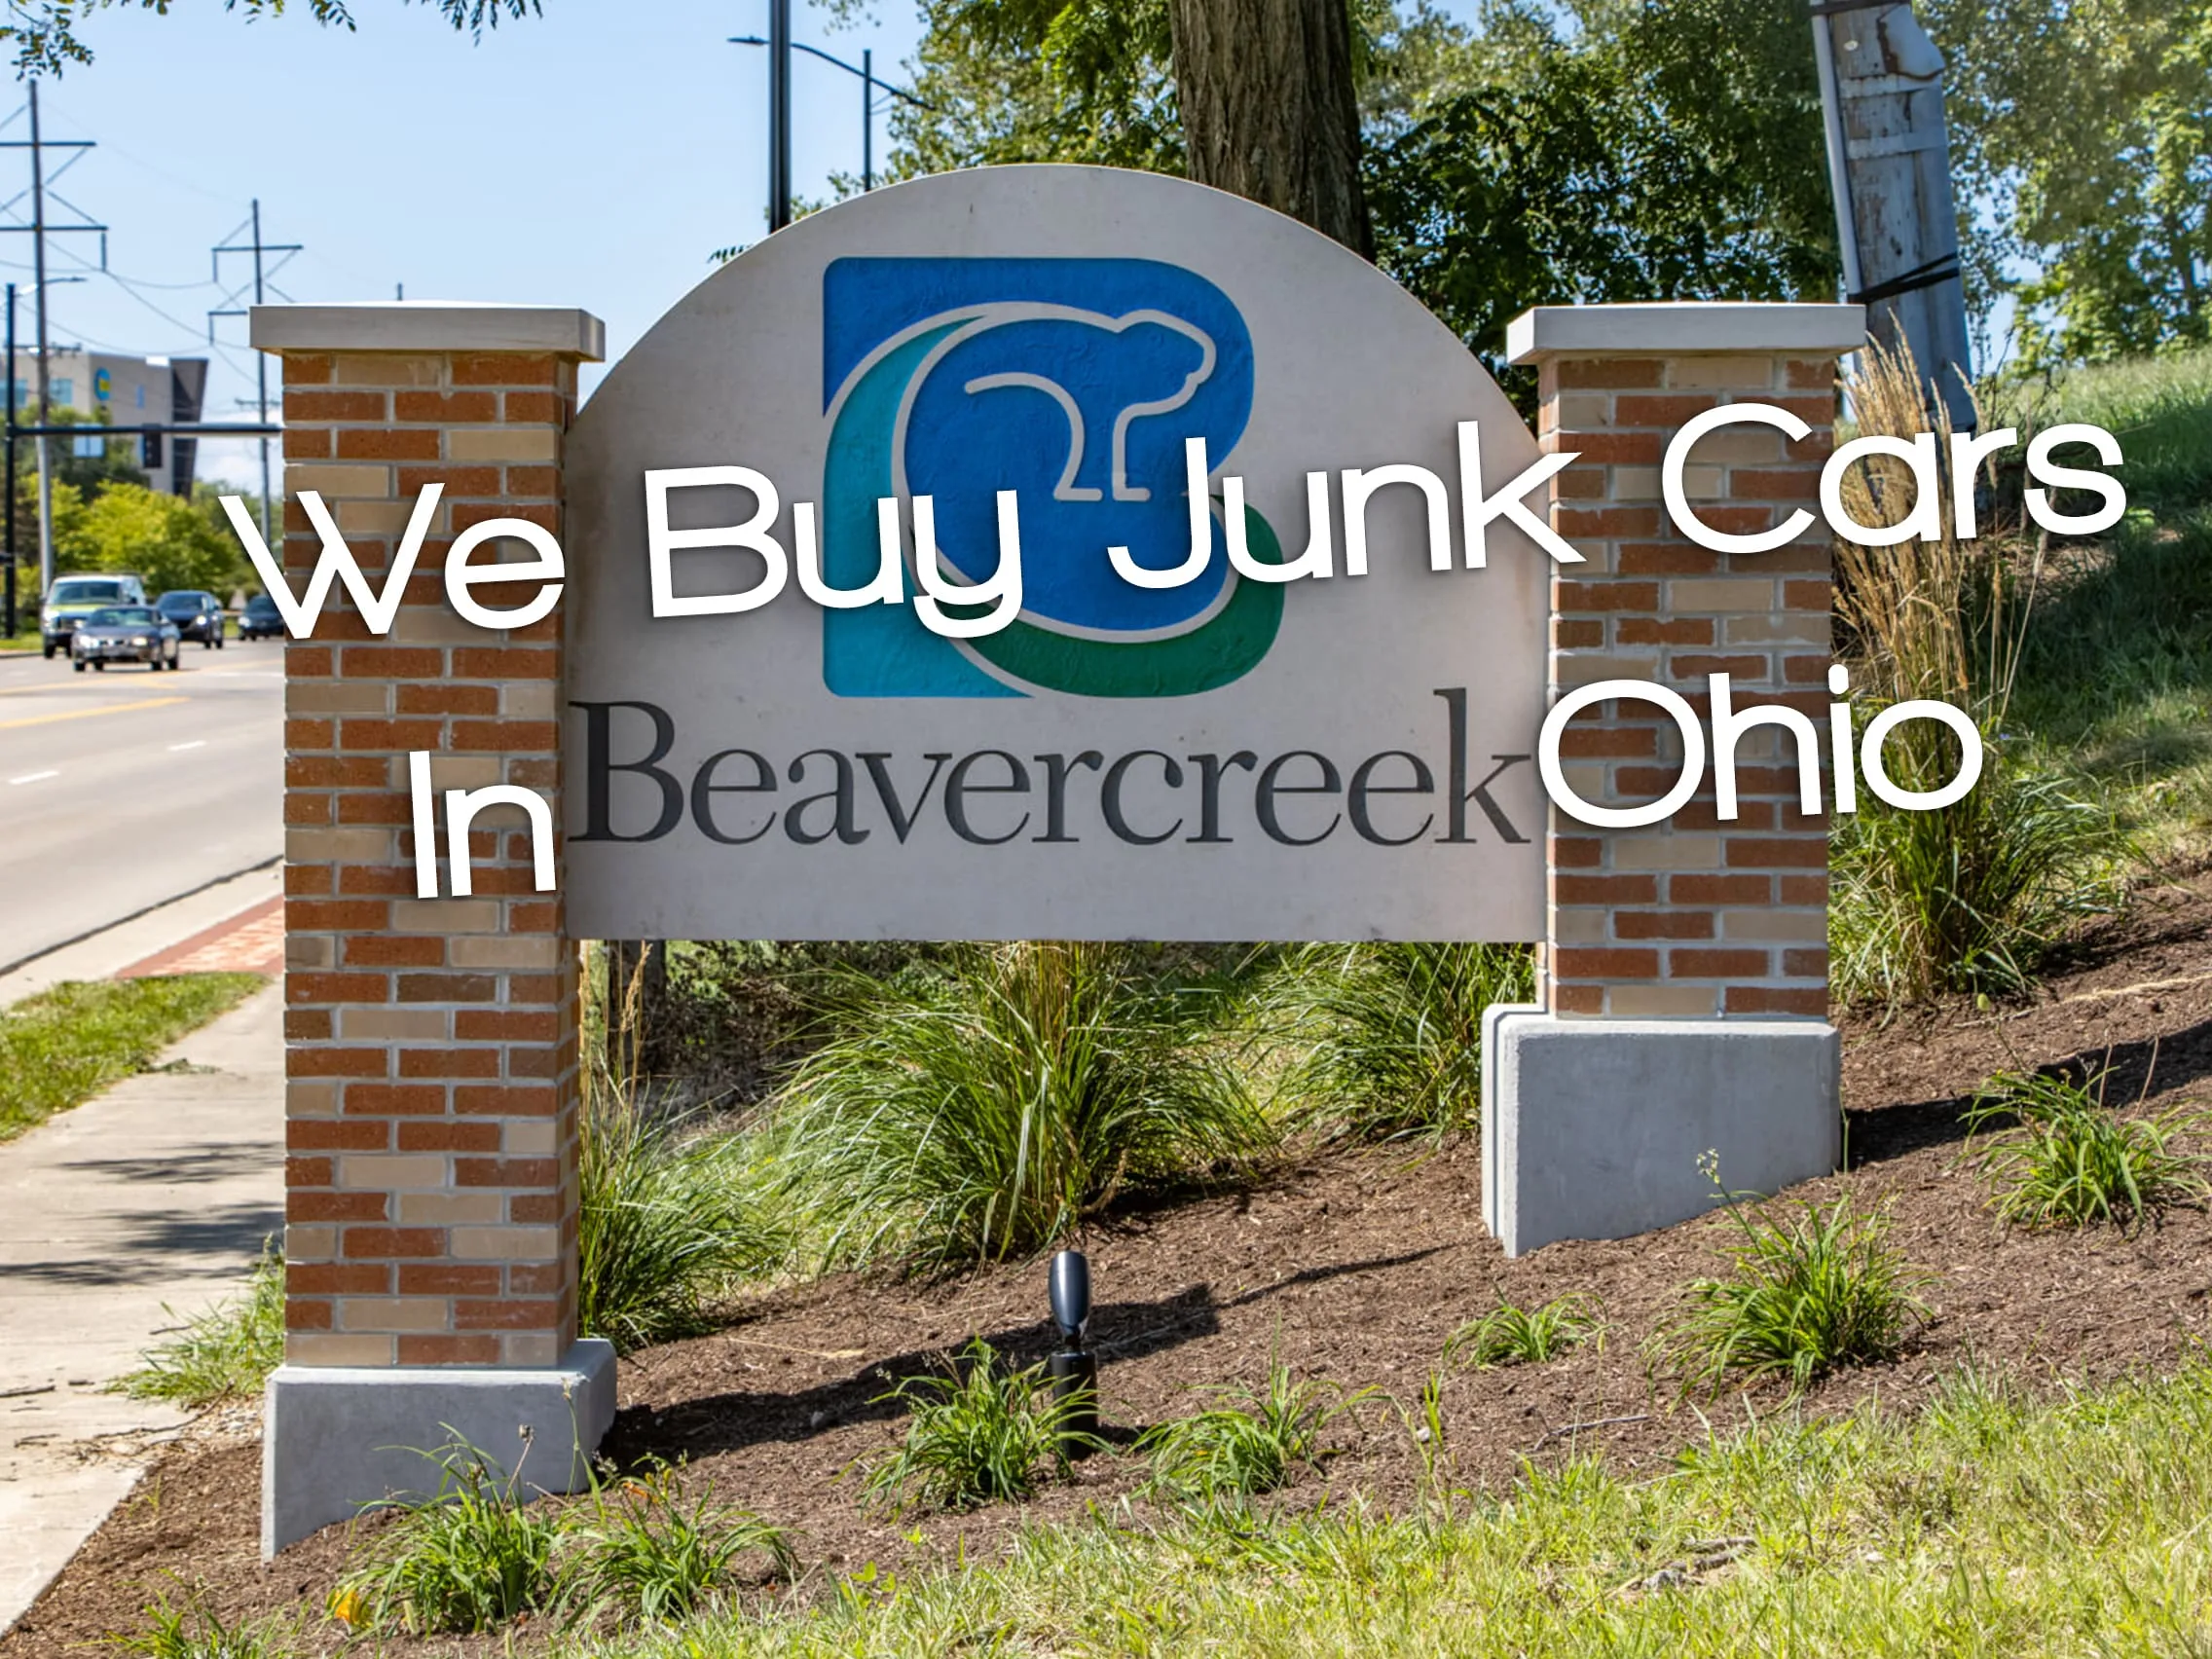 We Buy Junk Cars in Beavercreek Ohio